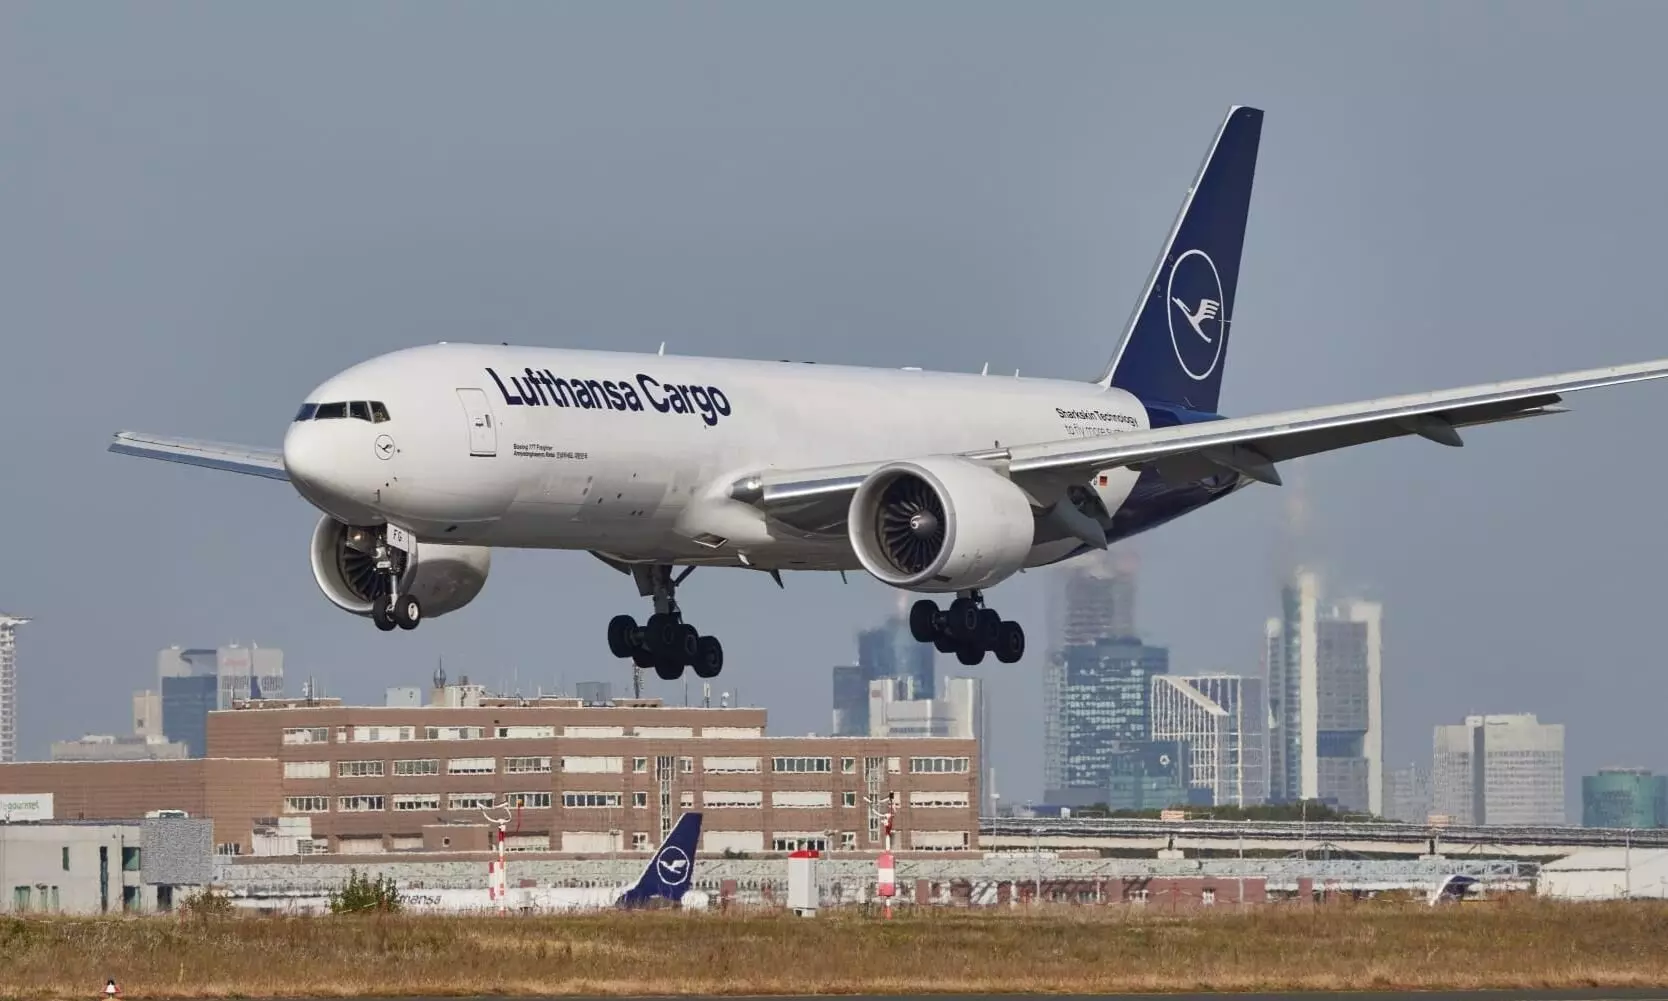 Lufthansa Cargo equips 4th freighter with CO2-efficient AeroSHARK tech